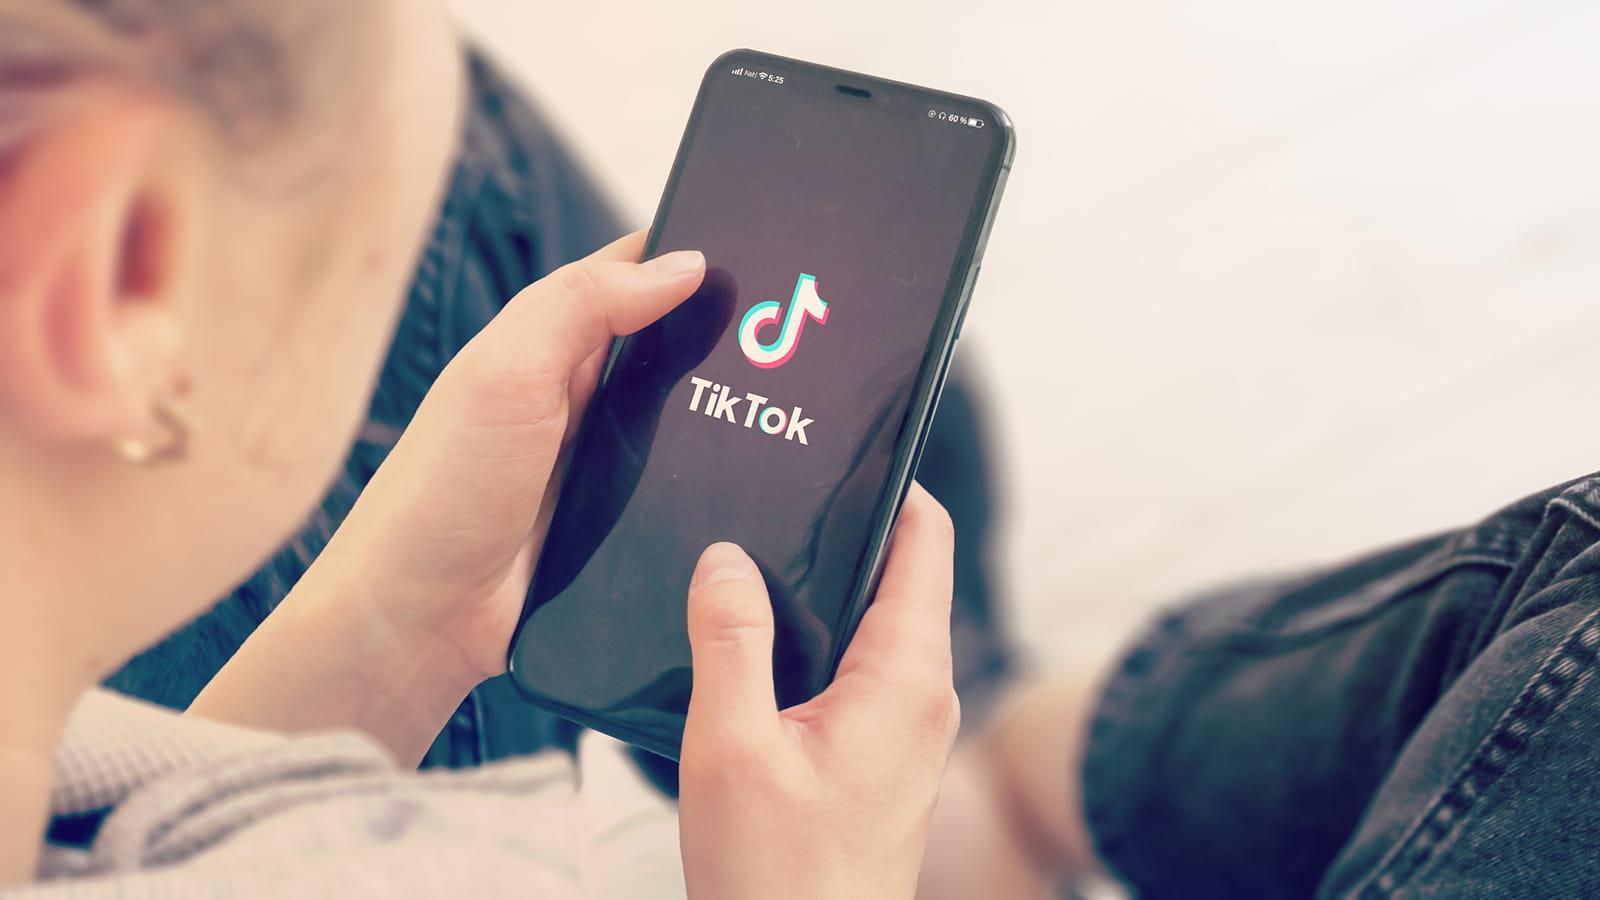 women using a phone displaying the TikTok logo